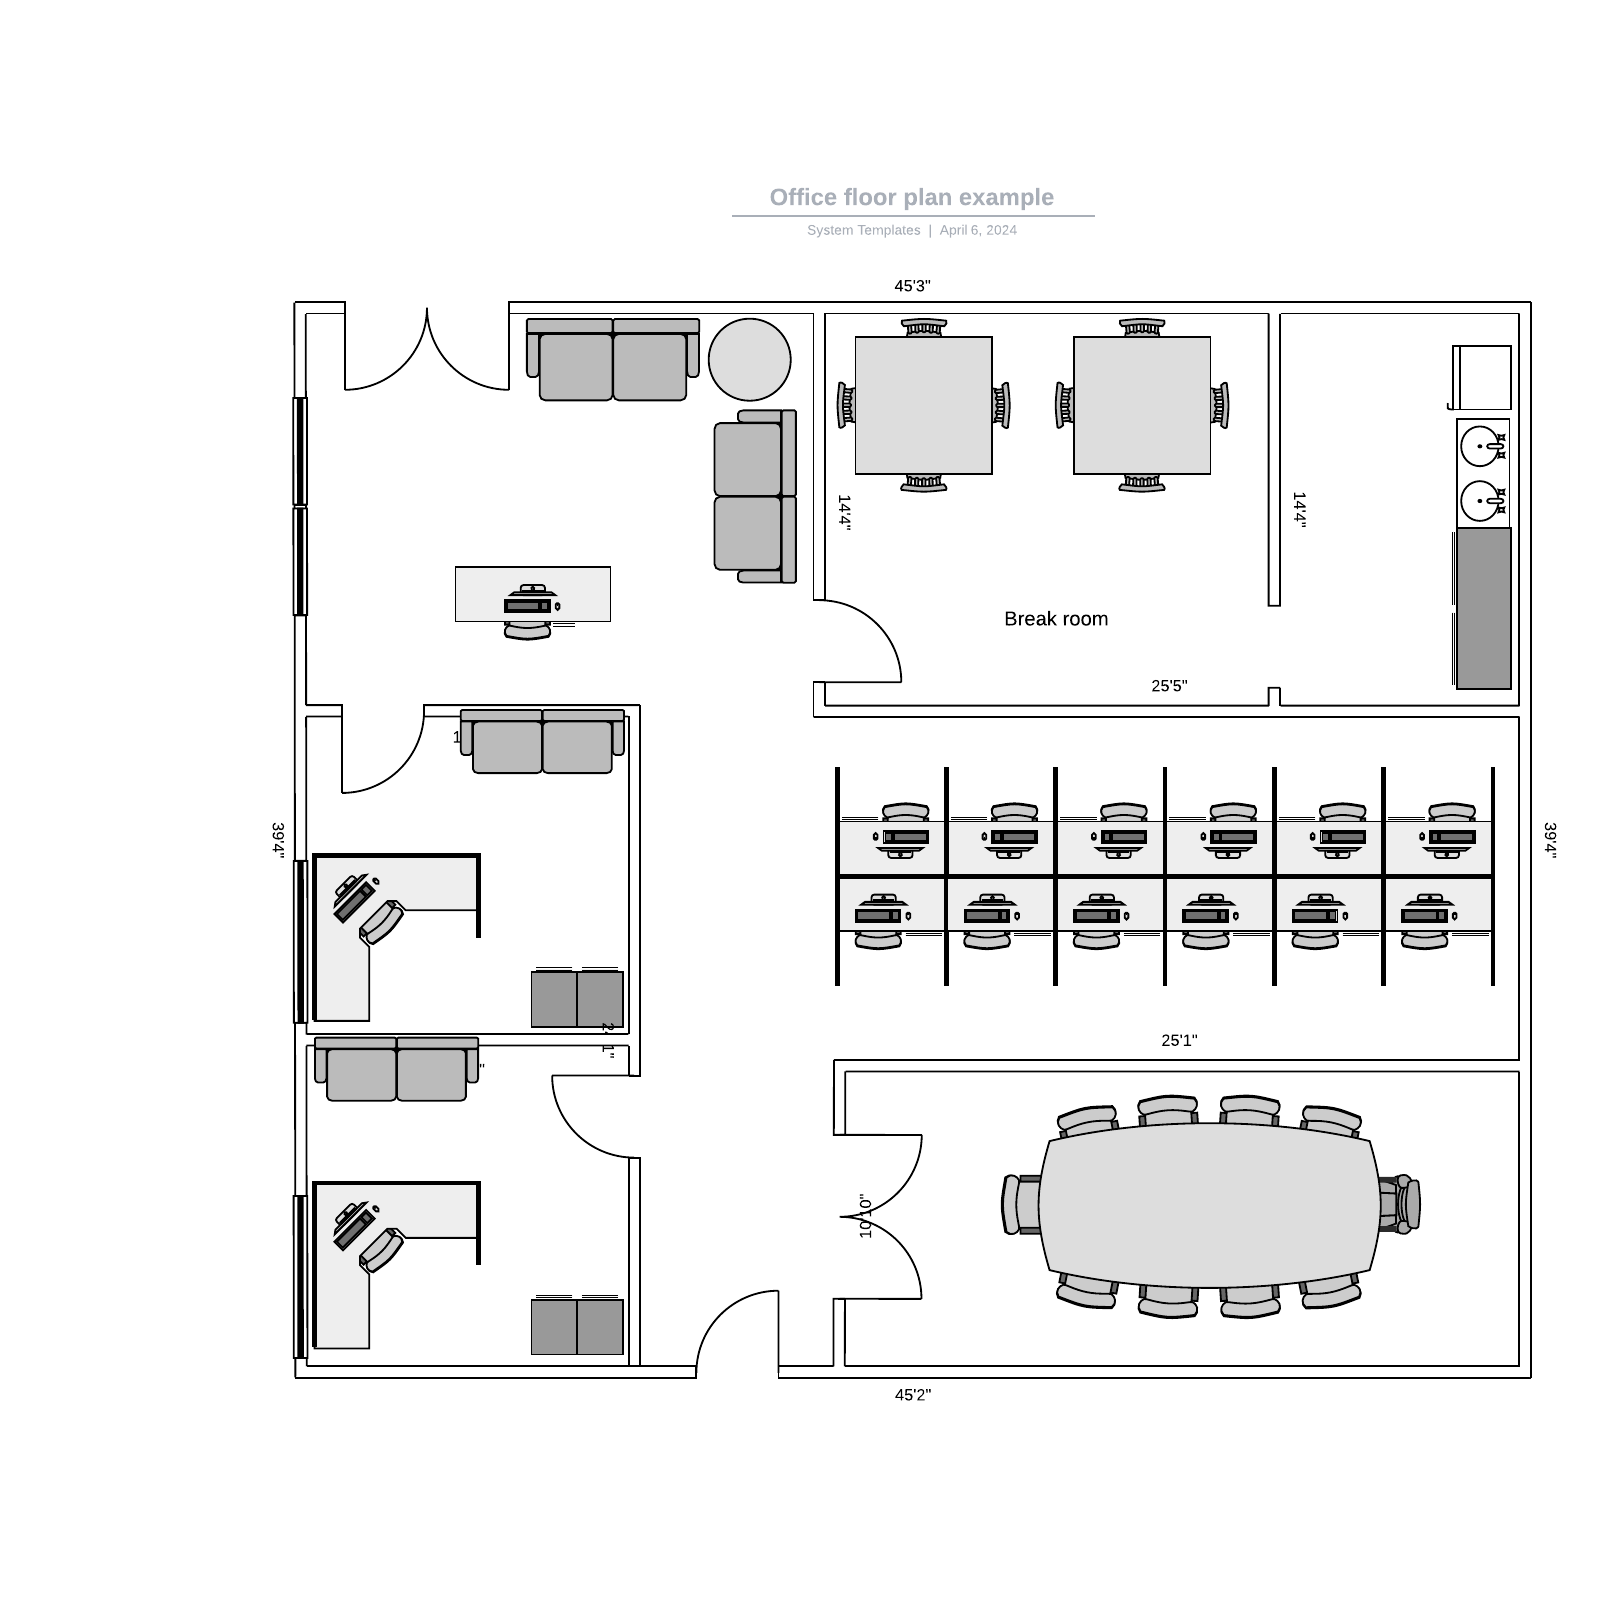 Office floor plan example example